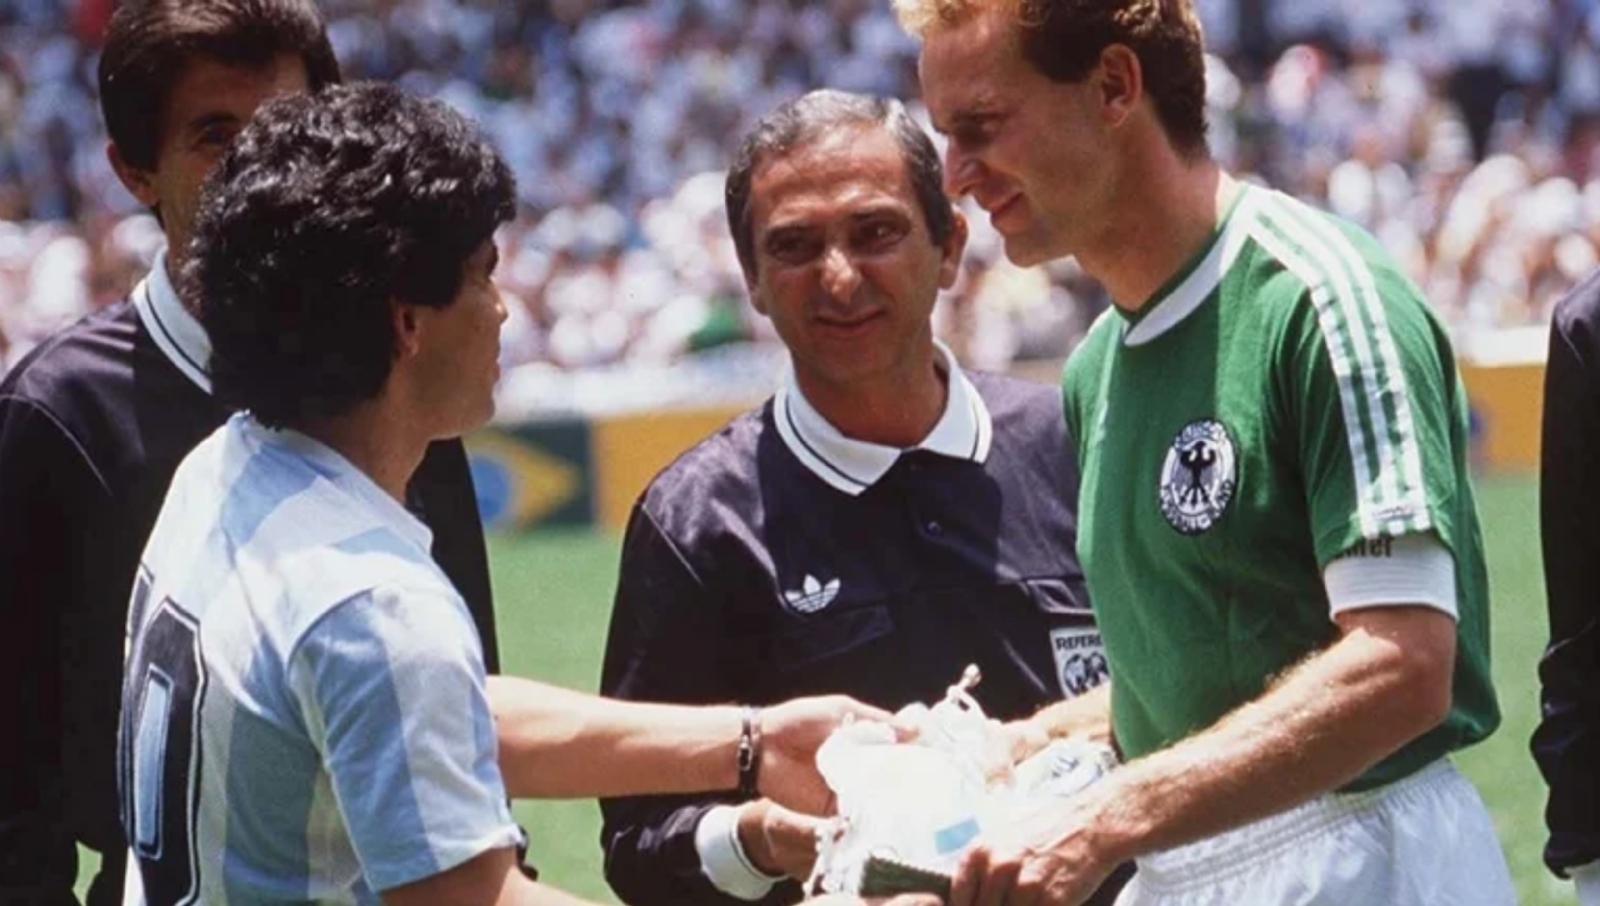 Falleció el árbitro del mundial México 1986, Romualdo Arppi Filho